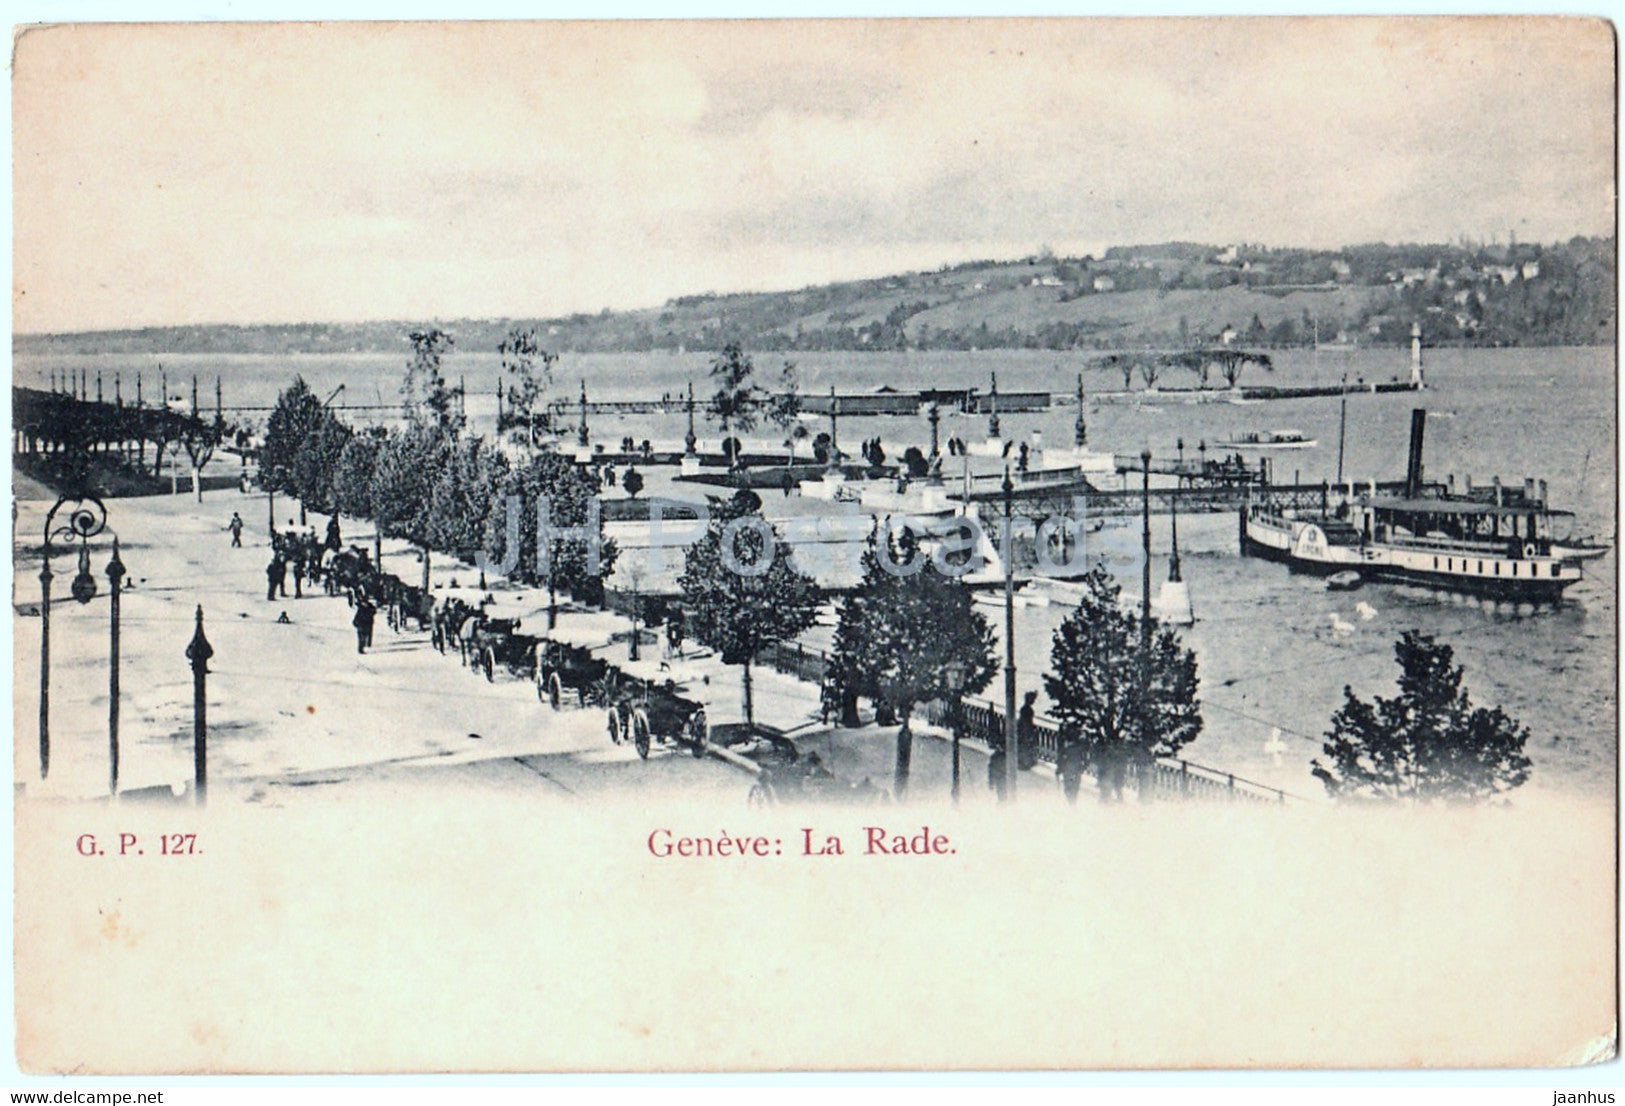 Geneve - Geneva - La Rade - steamer - ship - 127 - old postcard - Switzerland - unused - JH Postcards